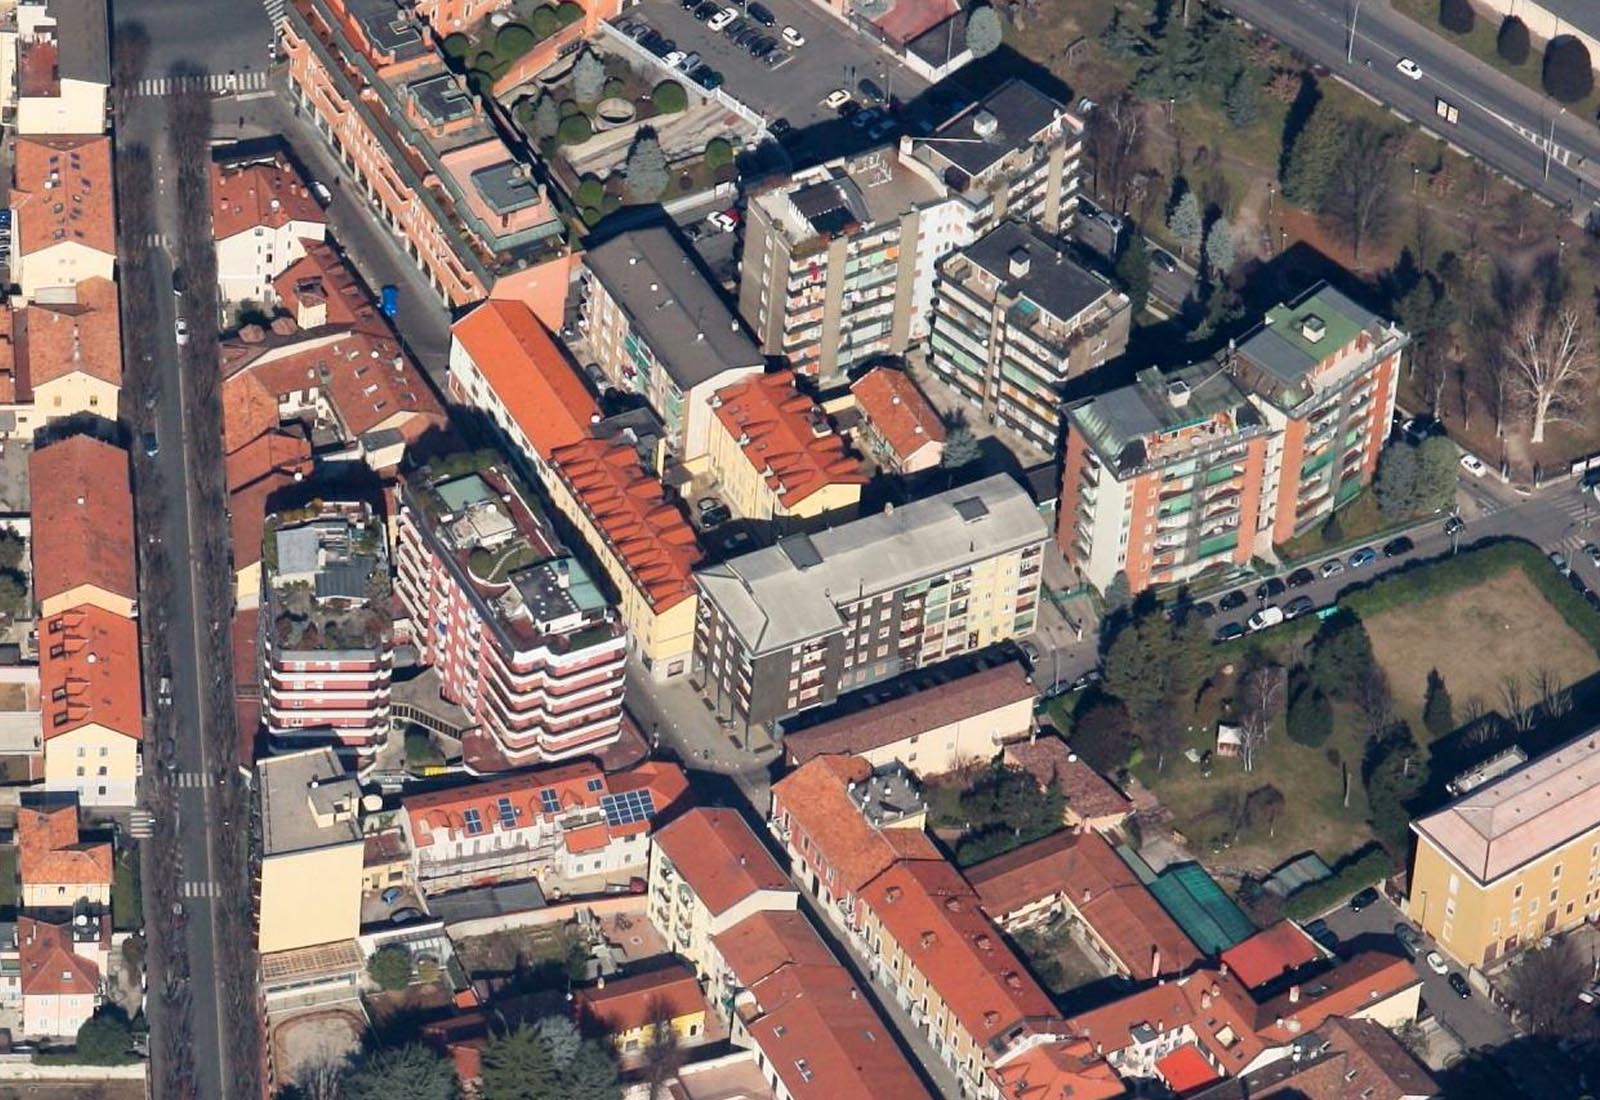 Apartment buildings complex in R. Serra street in Rho - Aerial view